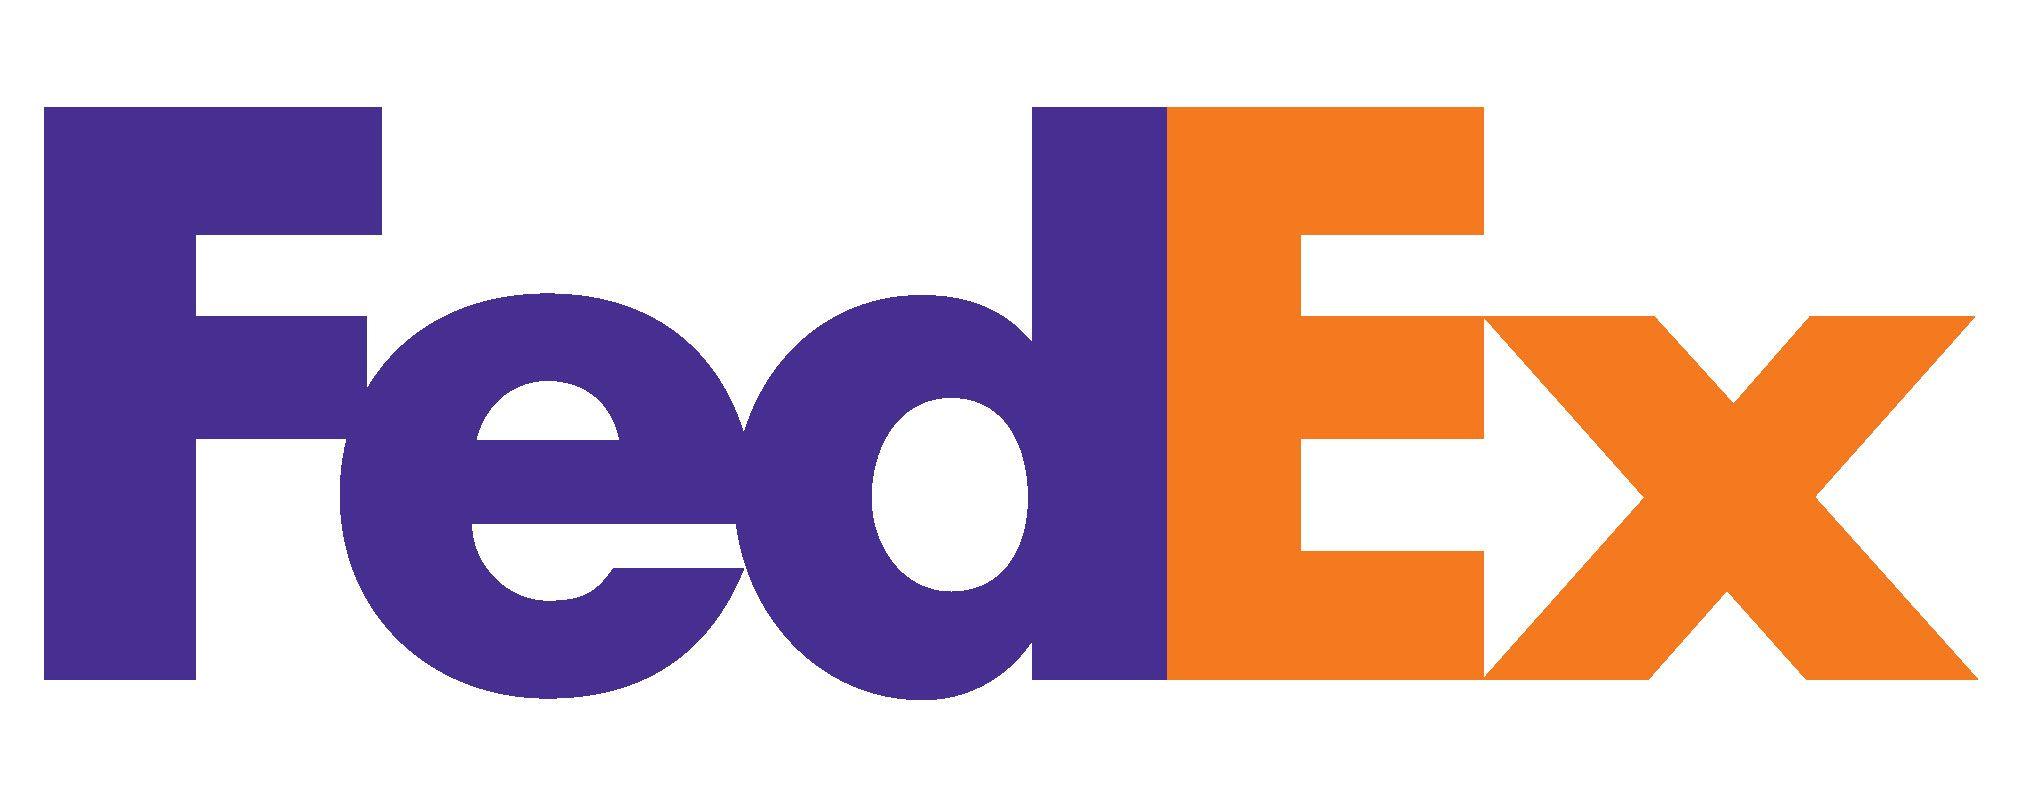 FedEx Home Logo - FedEx | What's That Font?